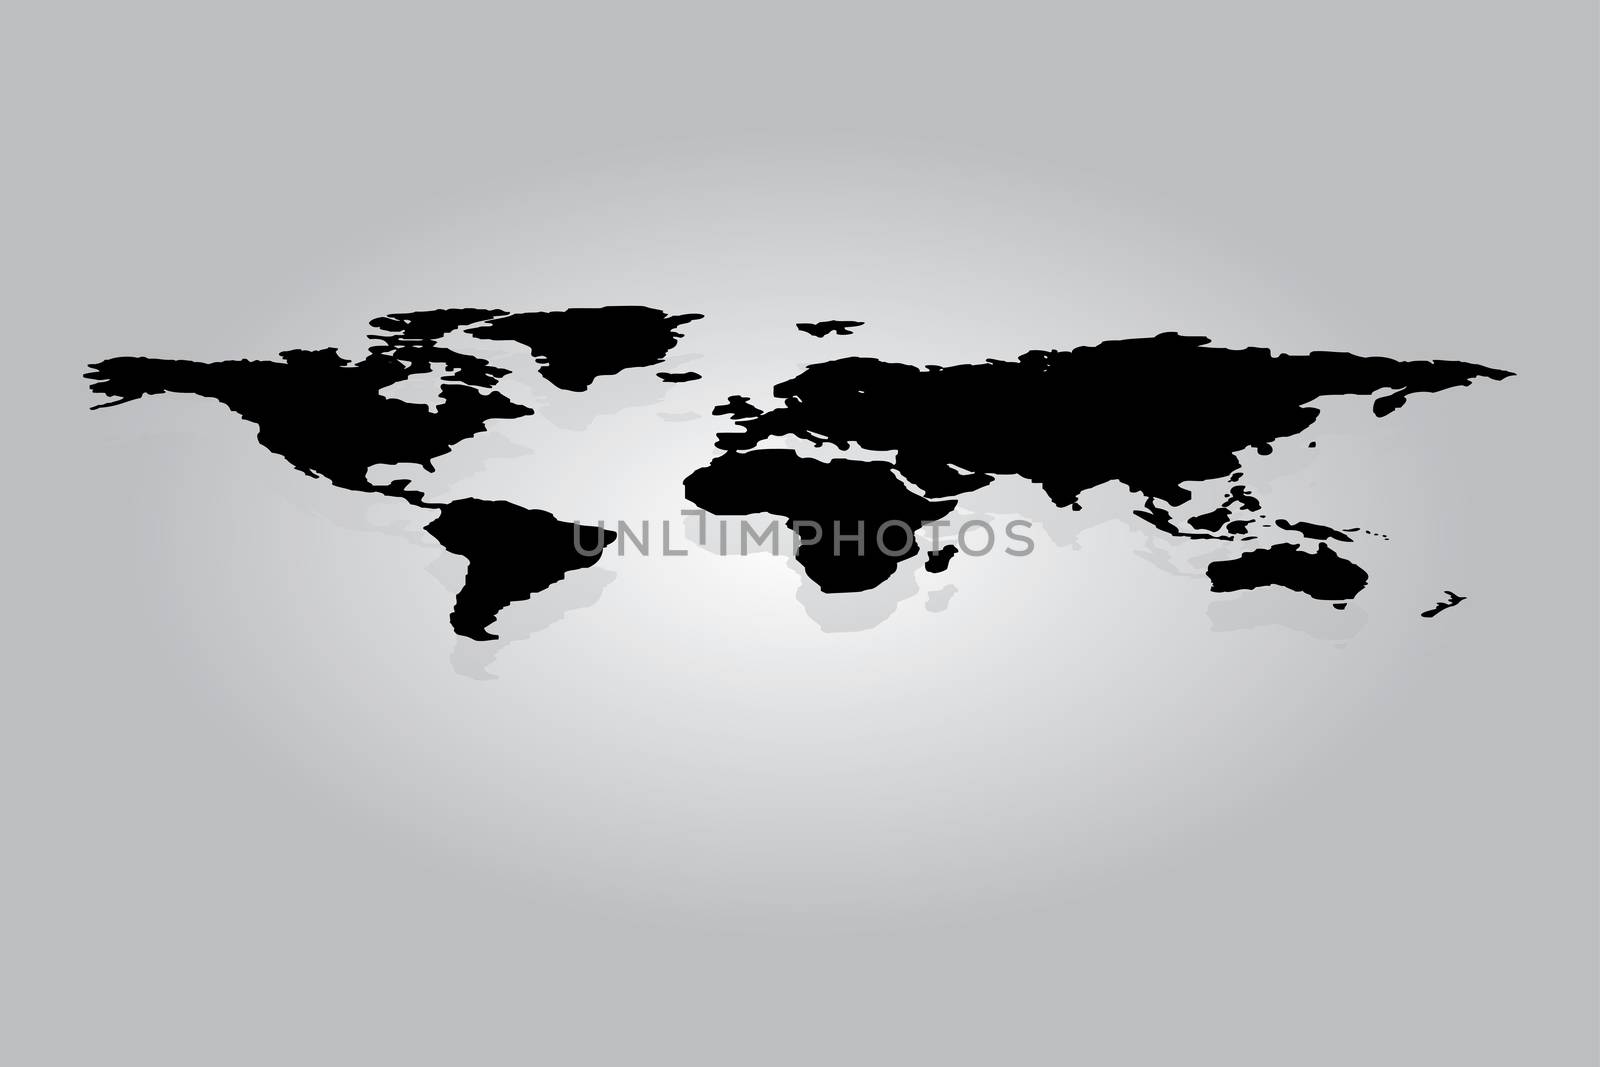 World map illustration isolated on clean background by DragonEyeMedia